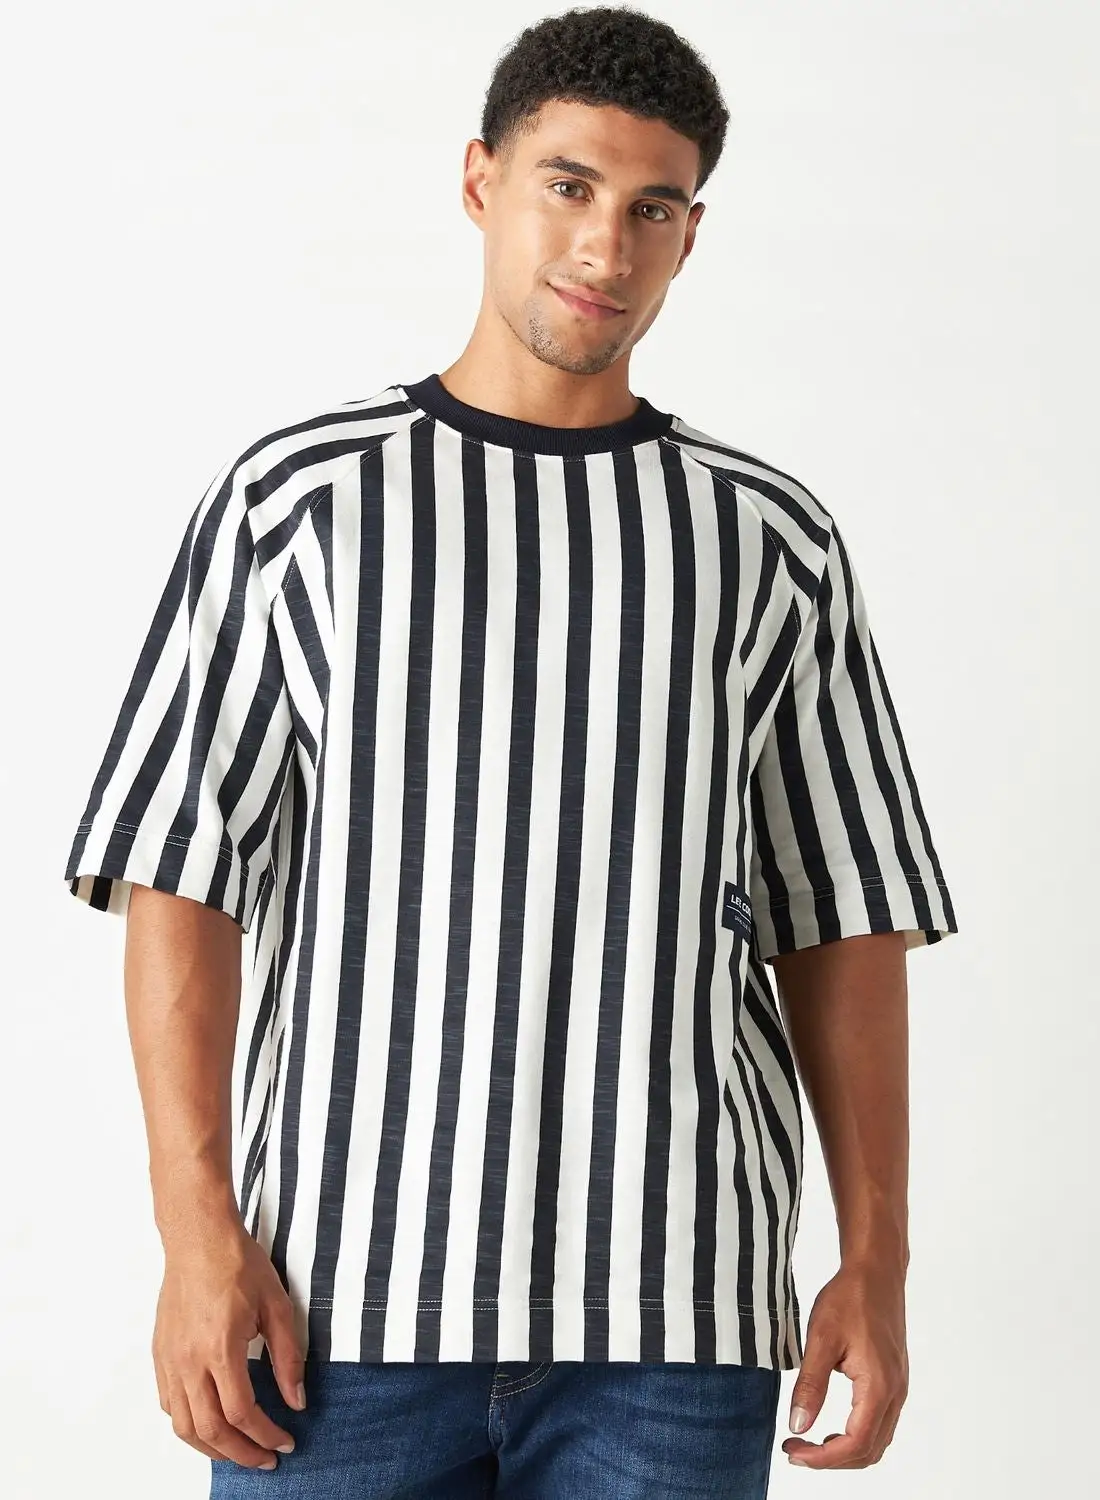 Lee Cooper Striped Crew Neck T-Shirt